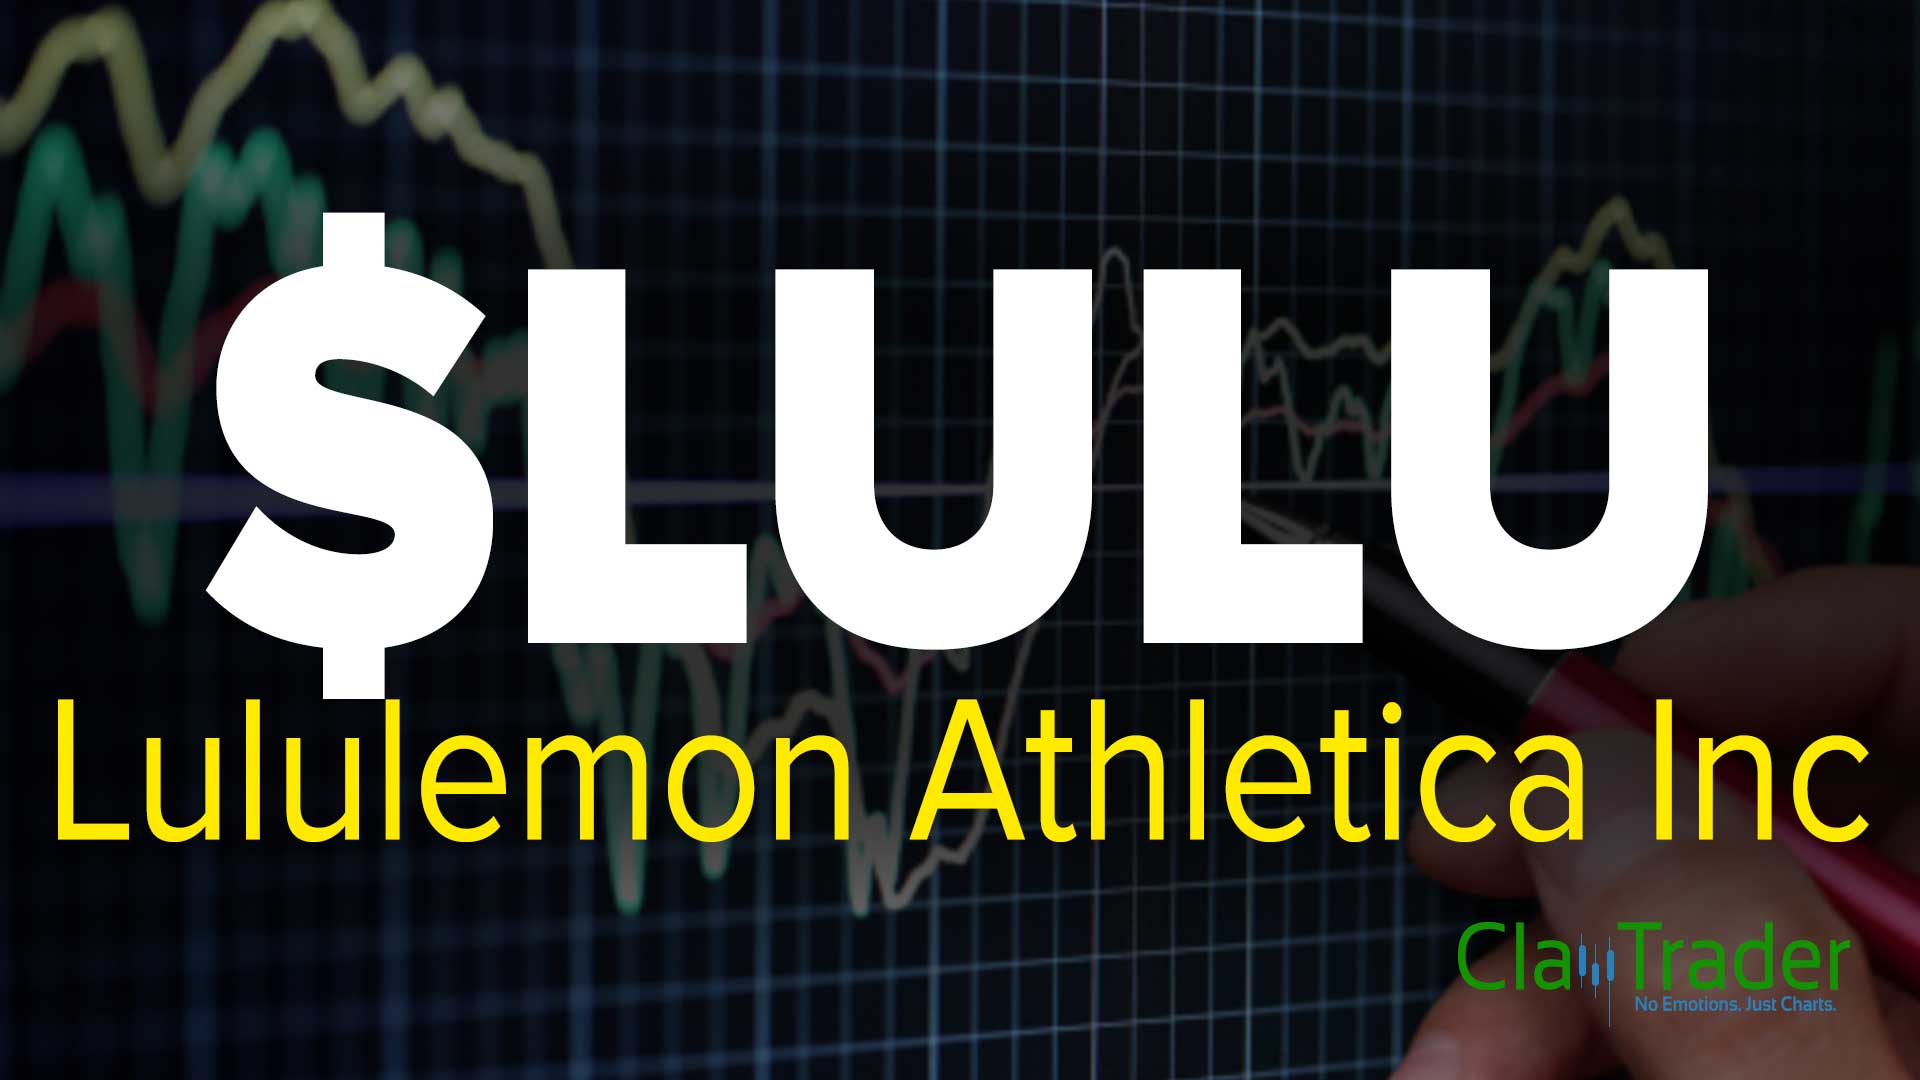 Lululemon Athletica Inc. (LULU) Stock Chart Technical Analysis